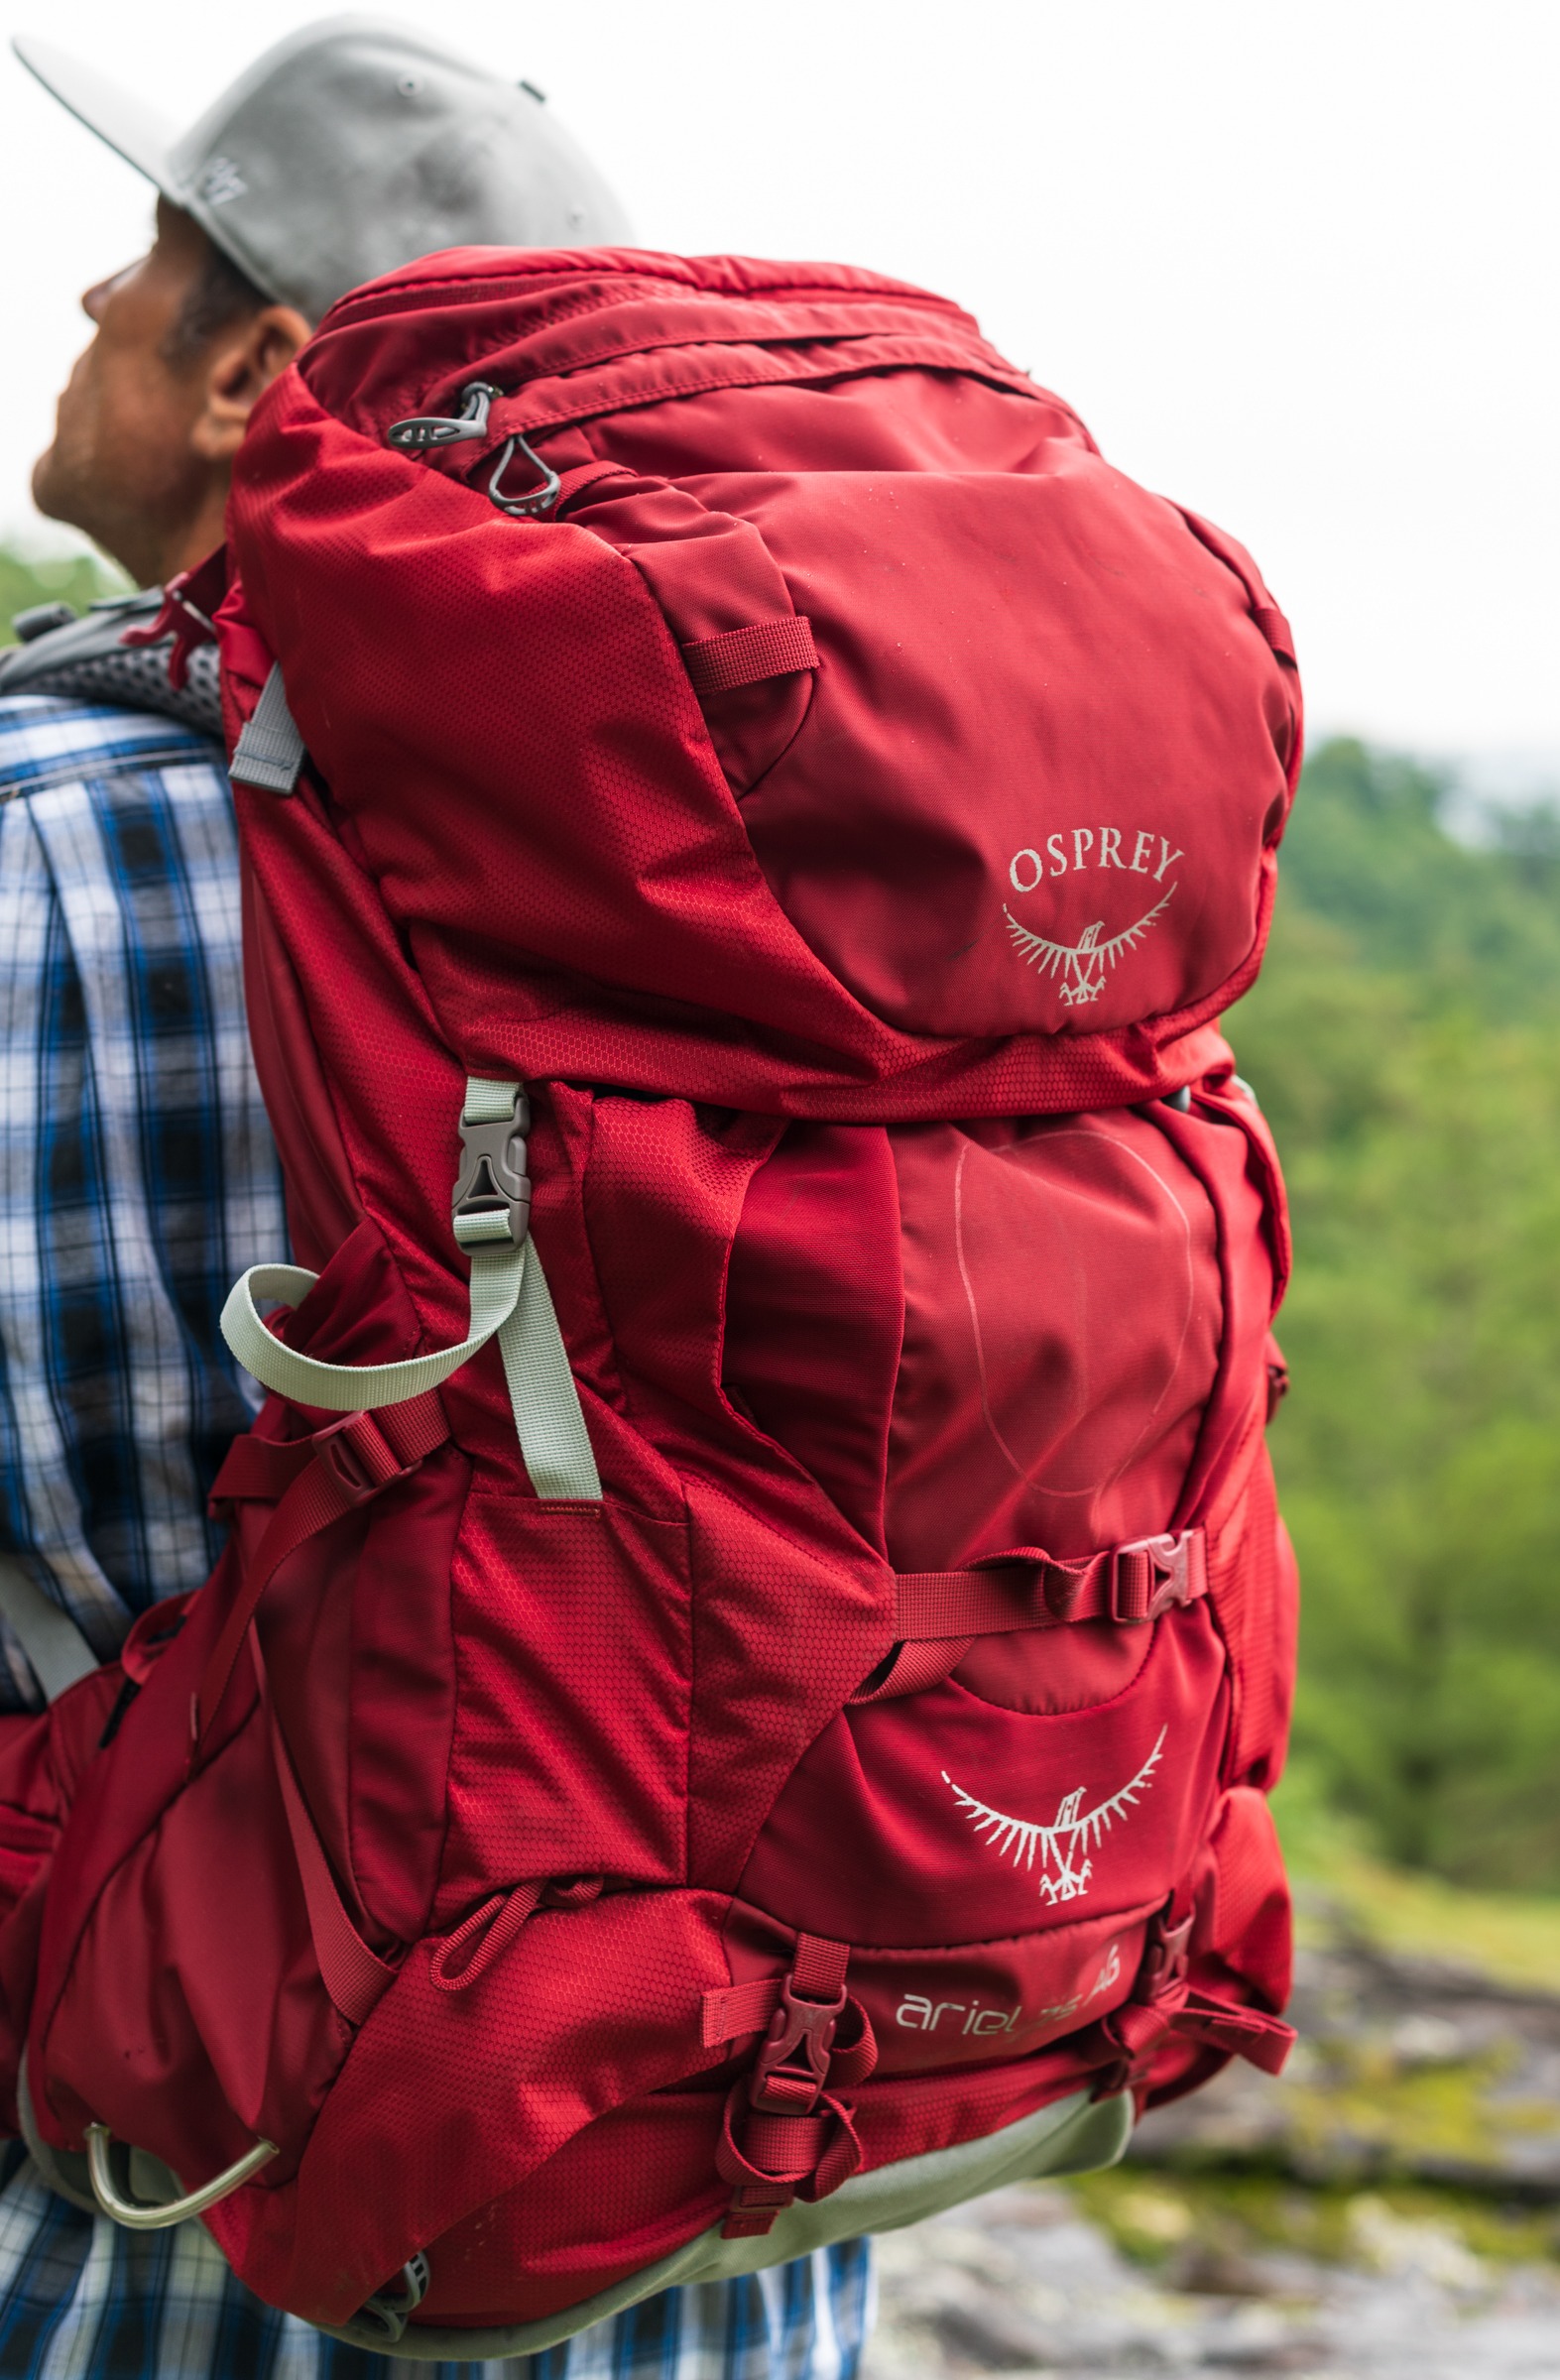 Model with Osprey backpack in Nantahala Wilderness, North Carolina by Dailyn Matthews, Adventure Photographer